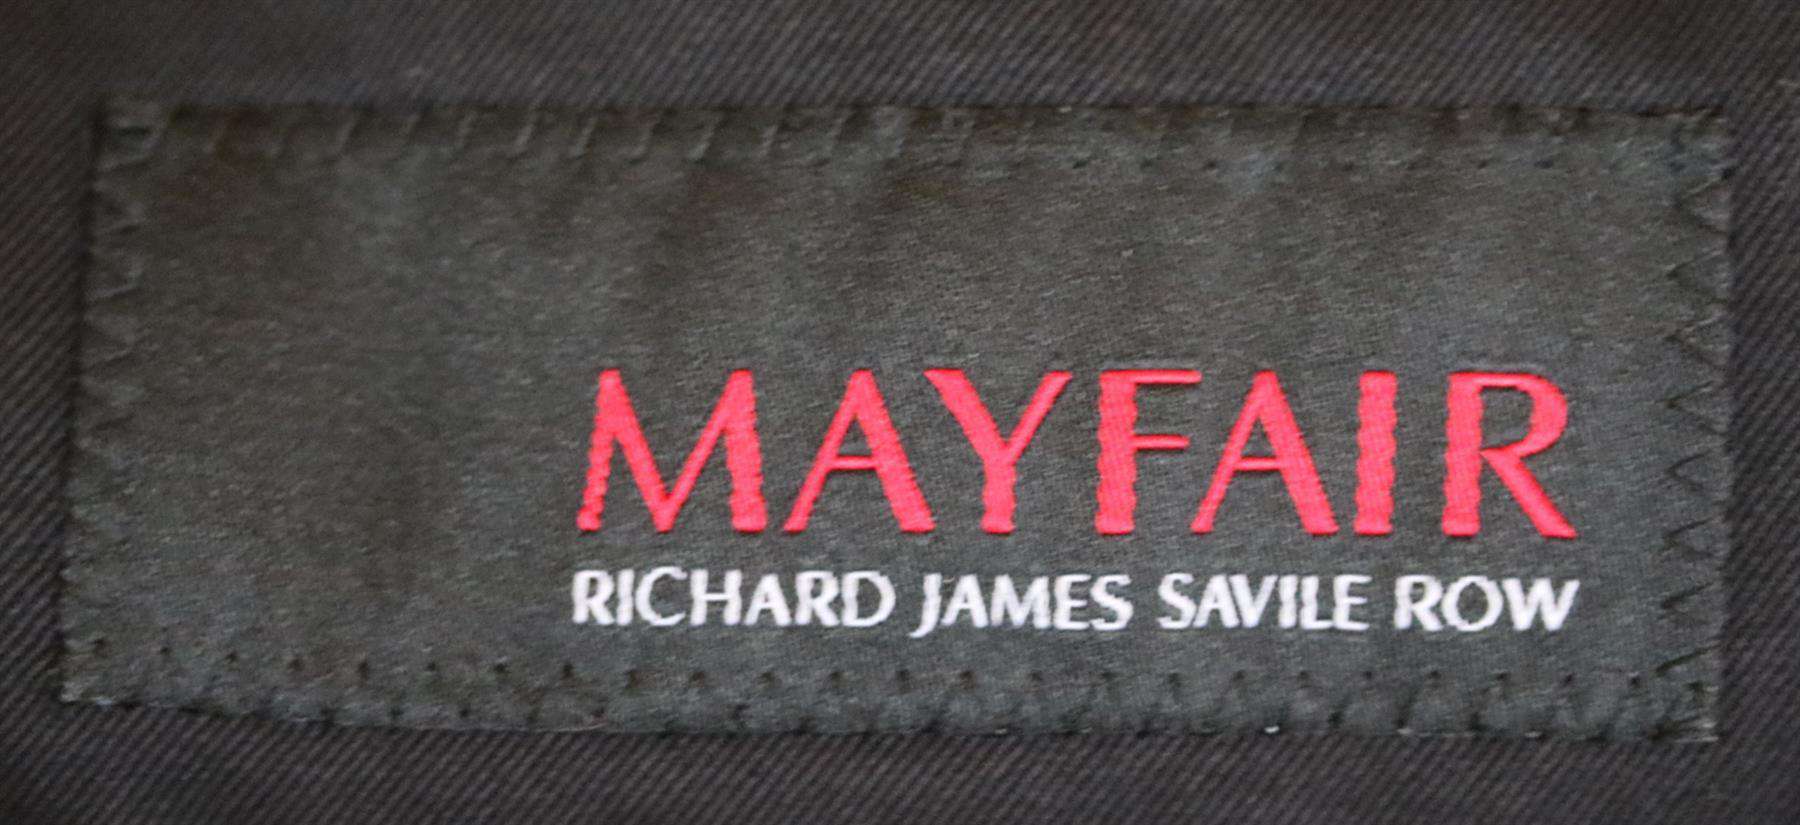 RICHARD JAMES MAYFAIR COTTON CLASSIC JACKET UK/US 38